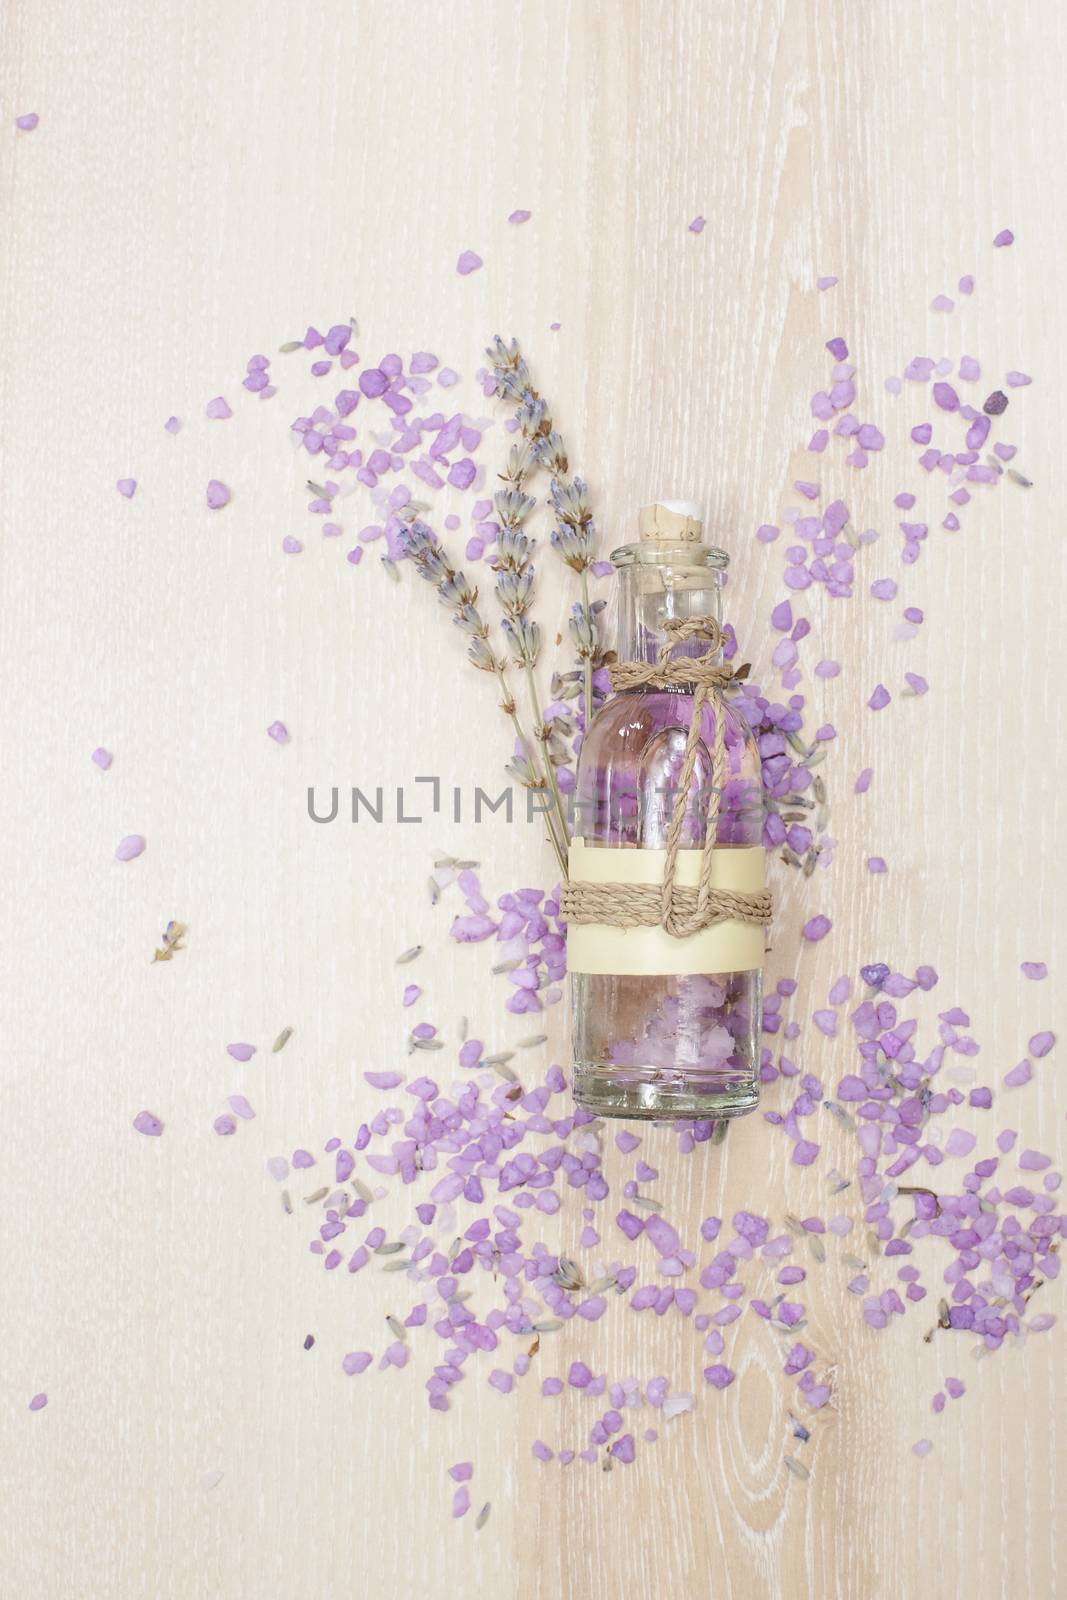 Aromatherapy lavender bath salt and massage oil on wooden background